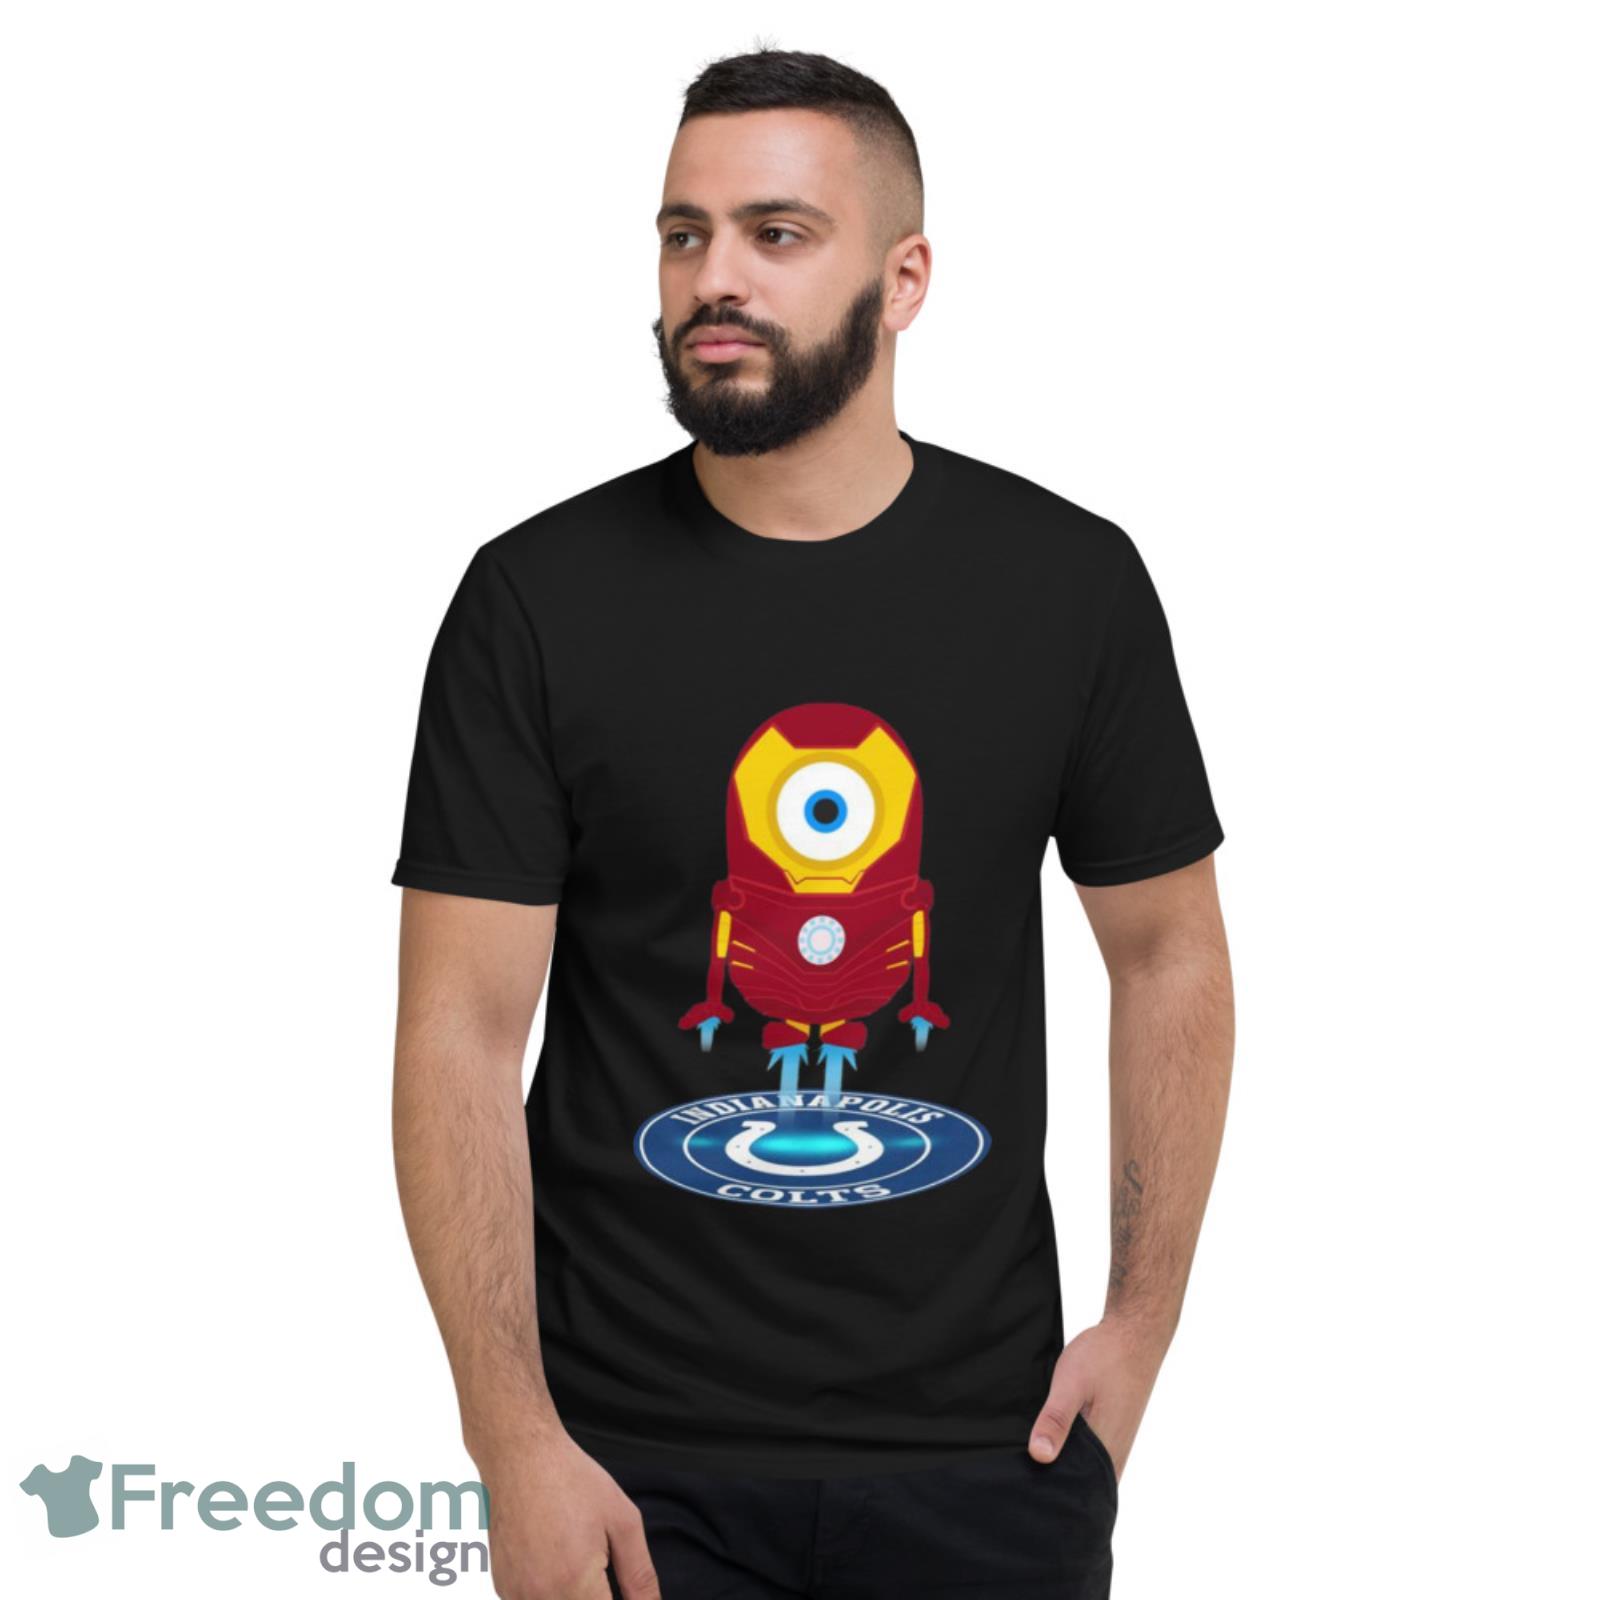 NFL Football Indianapolis Colts Iron Man Minion Marvel Shirt T Shirt -  Freedomdesign